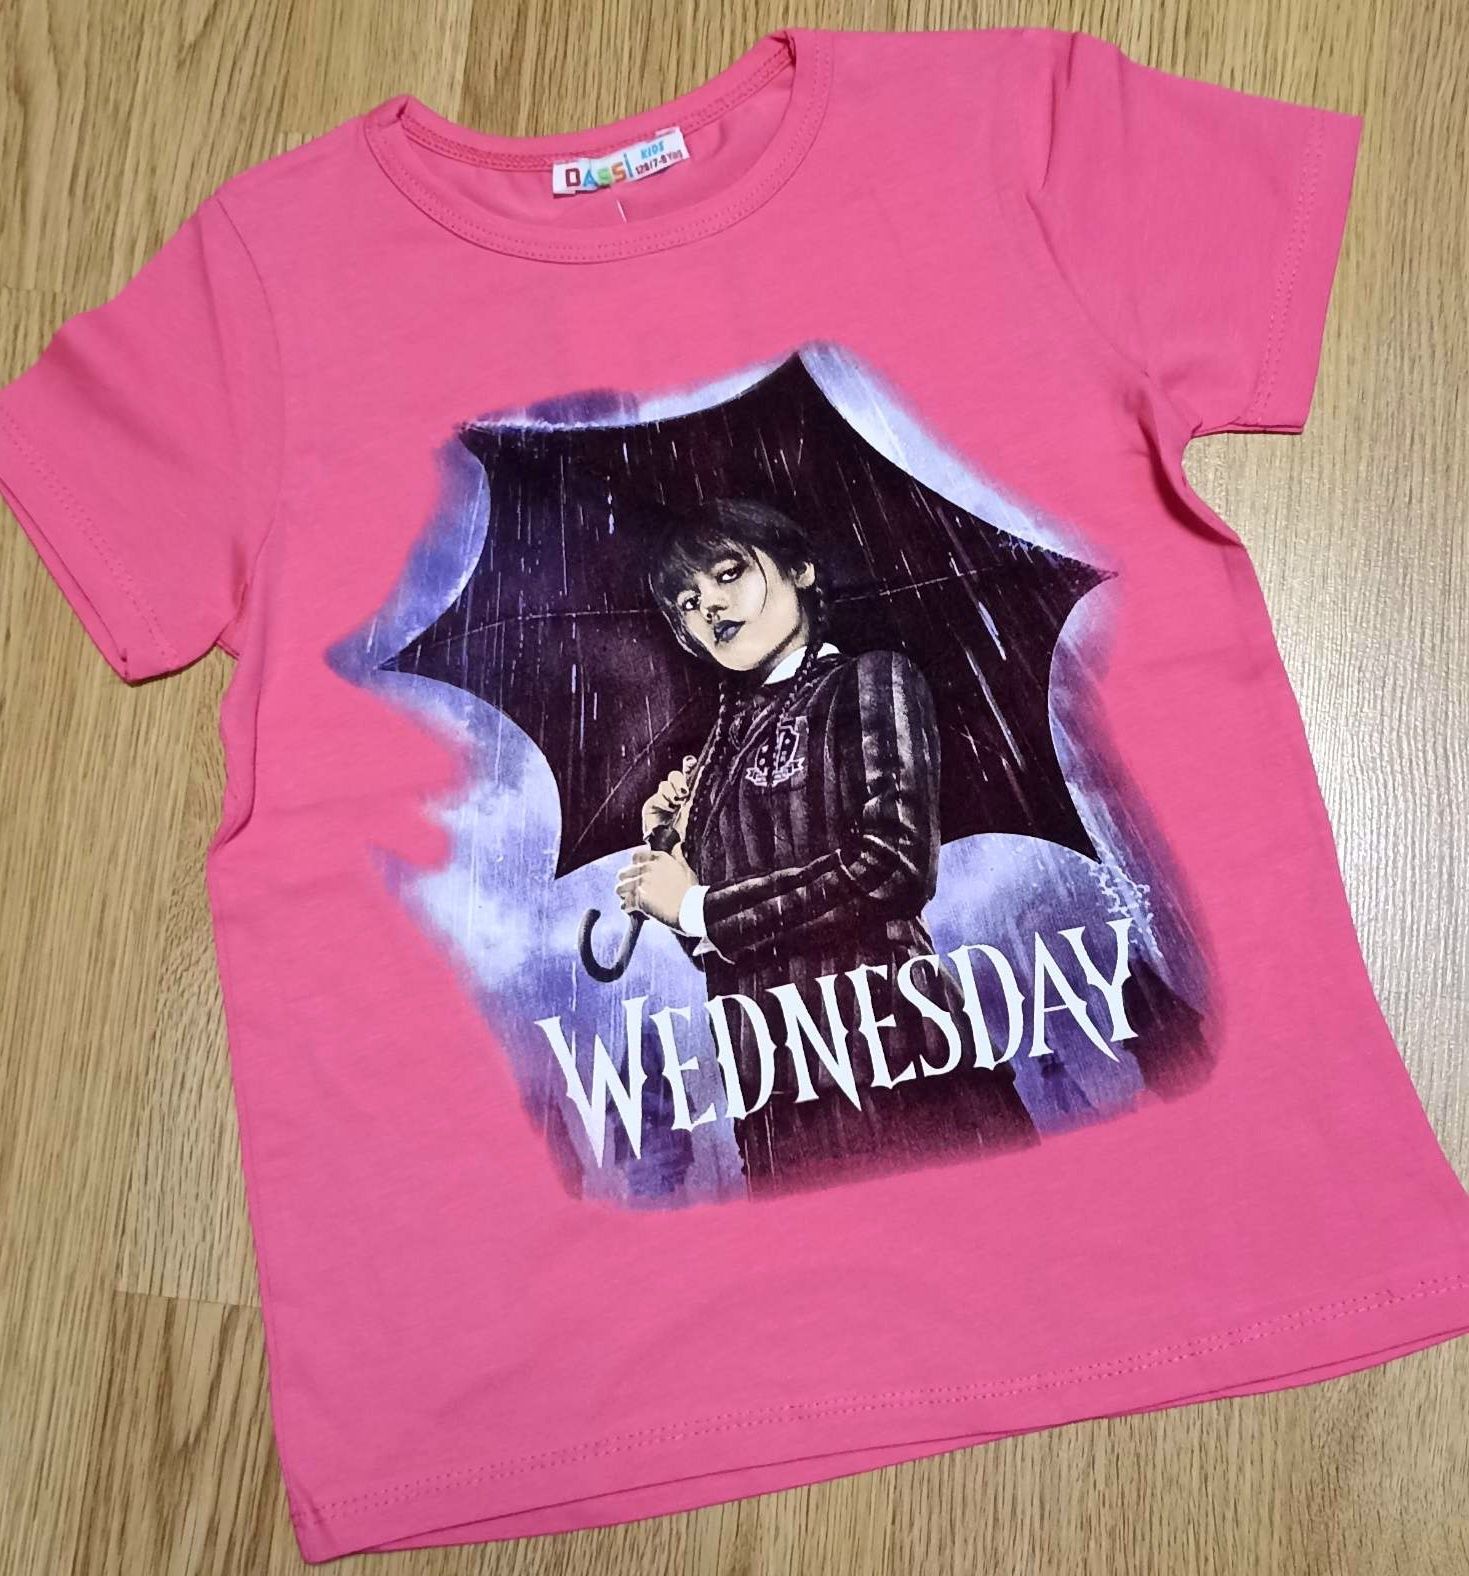 Wednesday футболки для дівчат, одежда Венсдей  футболка,  лосины